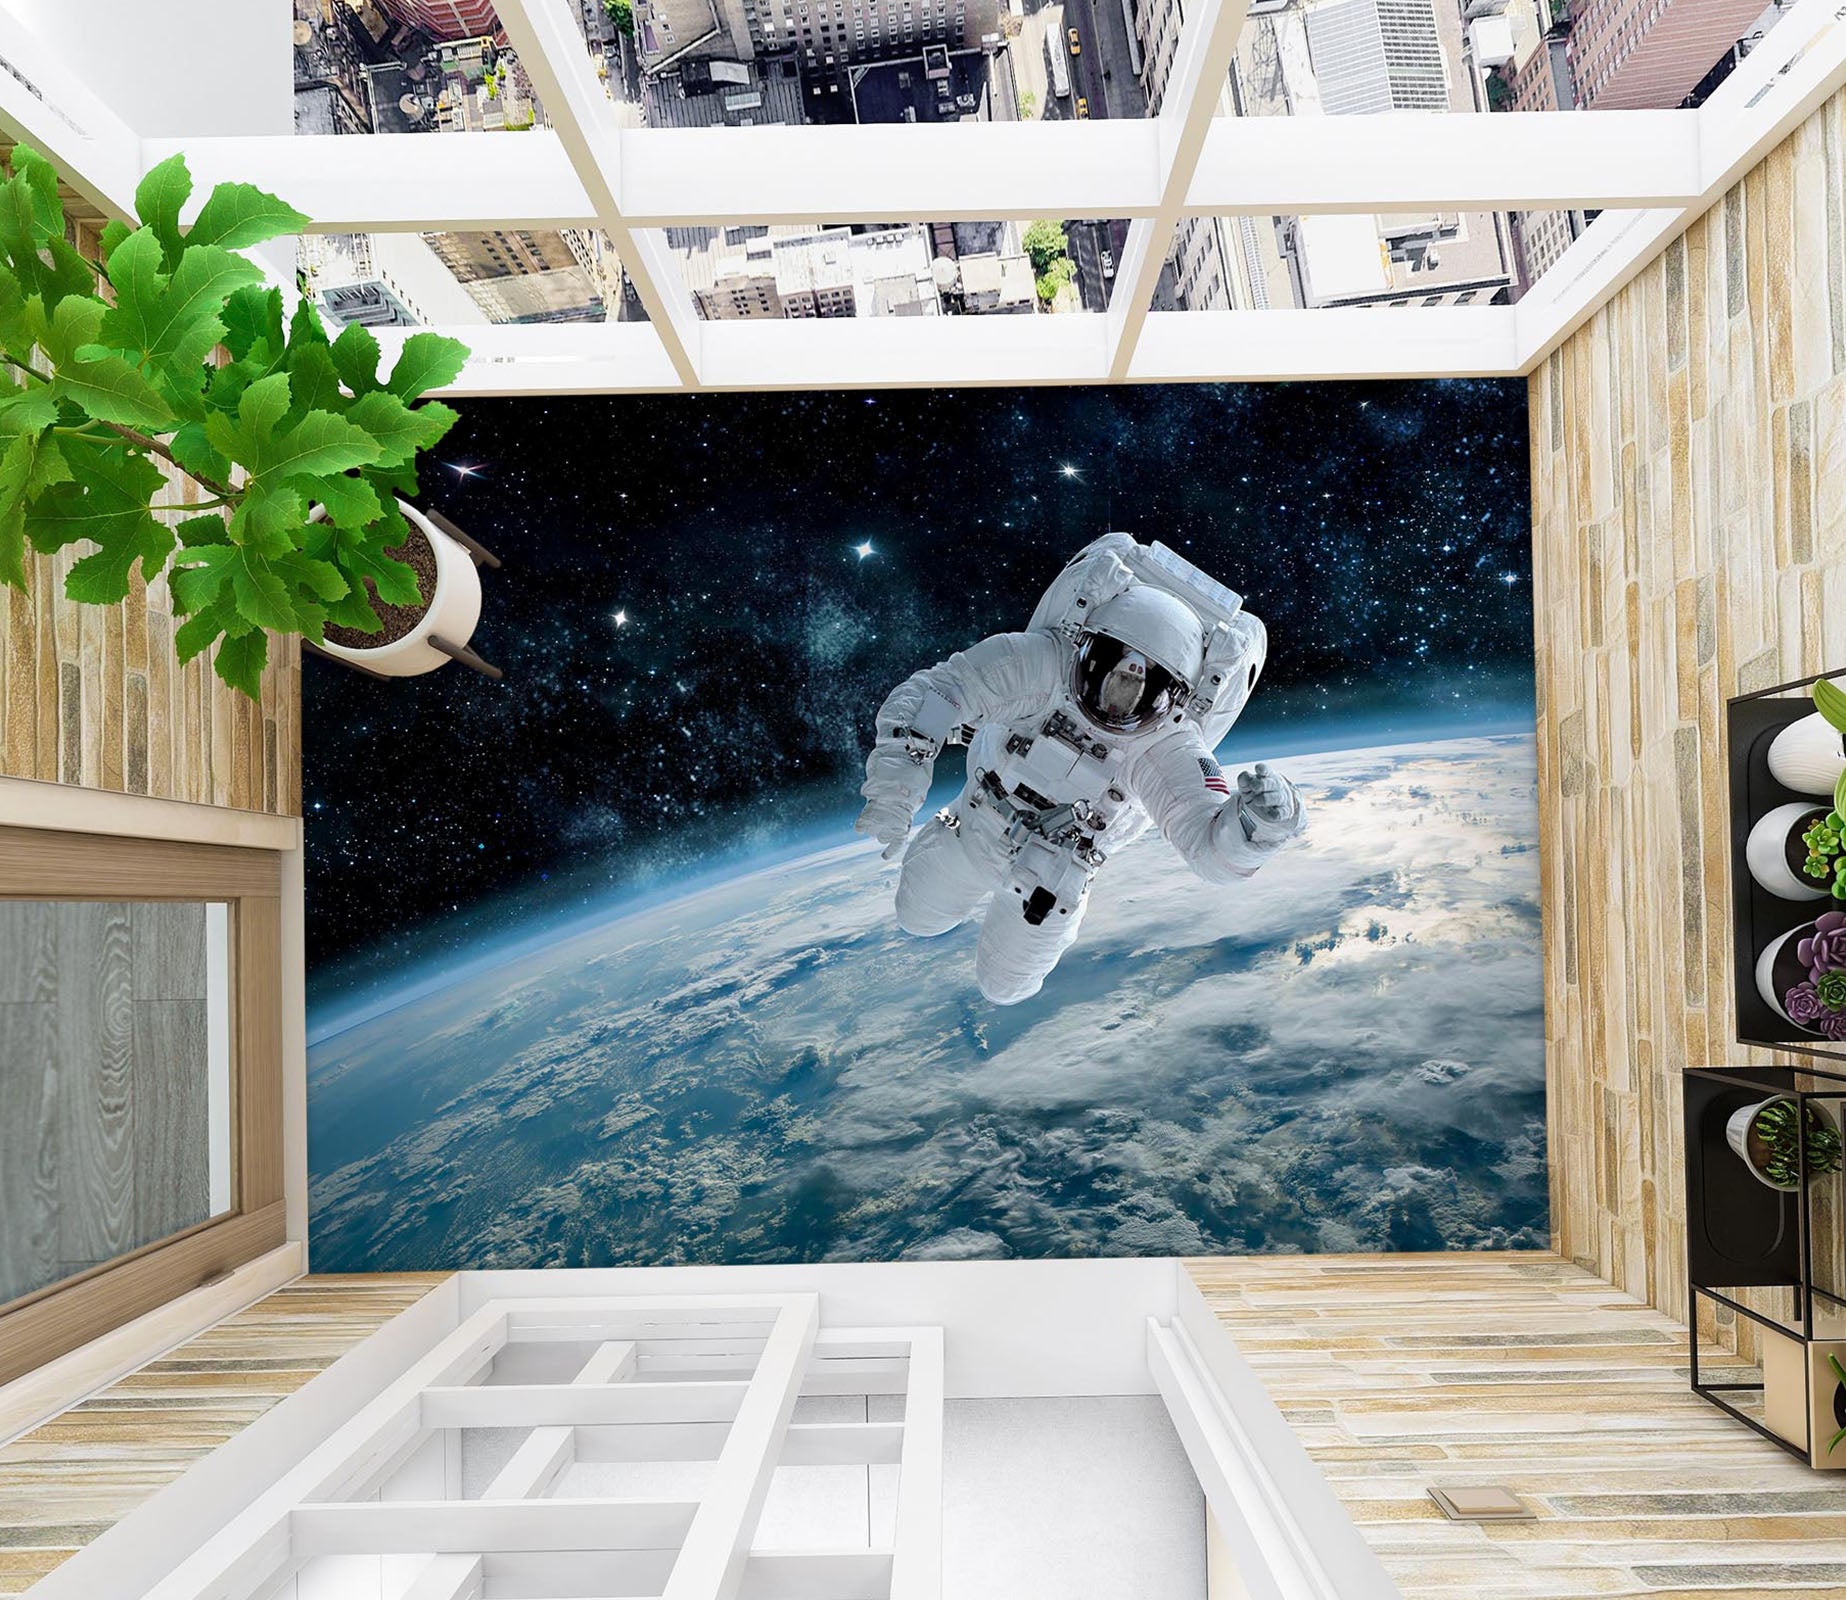 3D Astronaut Exploration 1267 Floor Mural  Wallpaper Murals Self-Adhesive Removable Print Epoxy